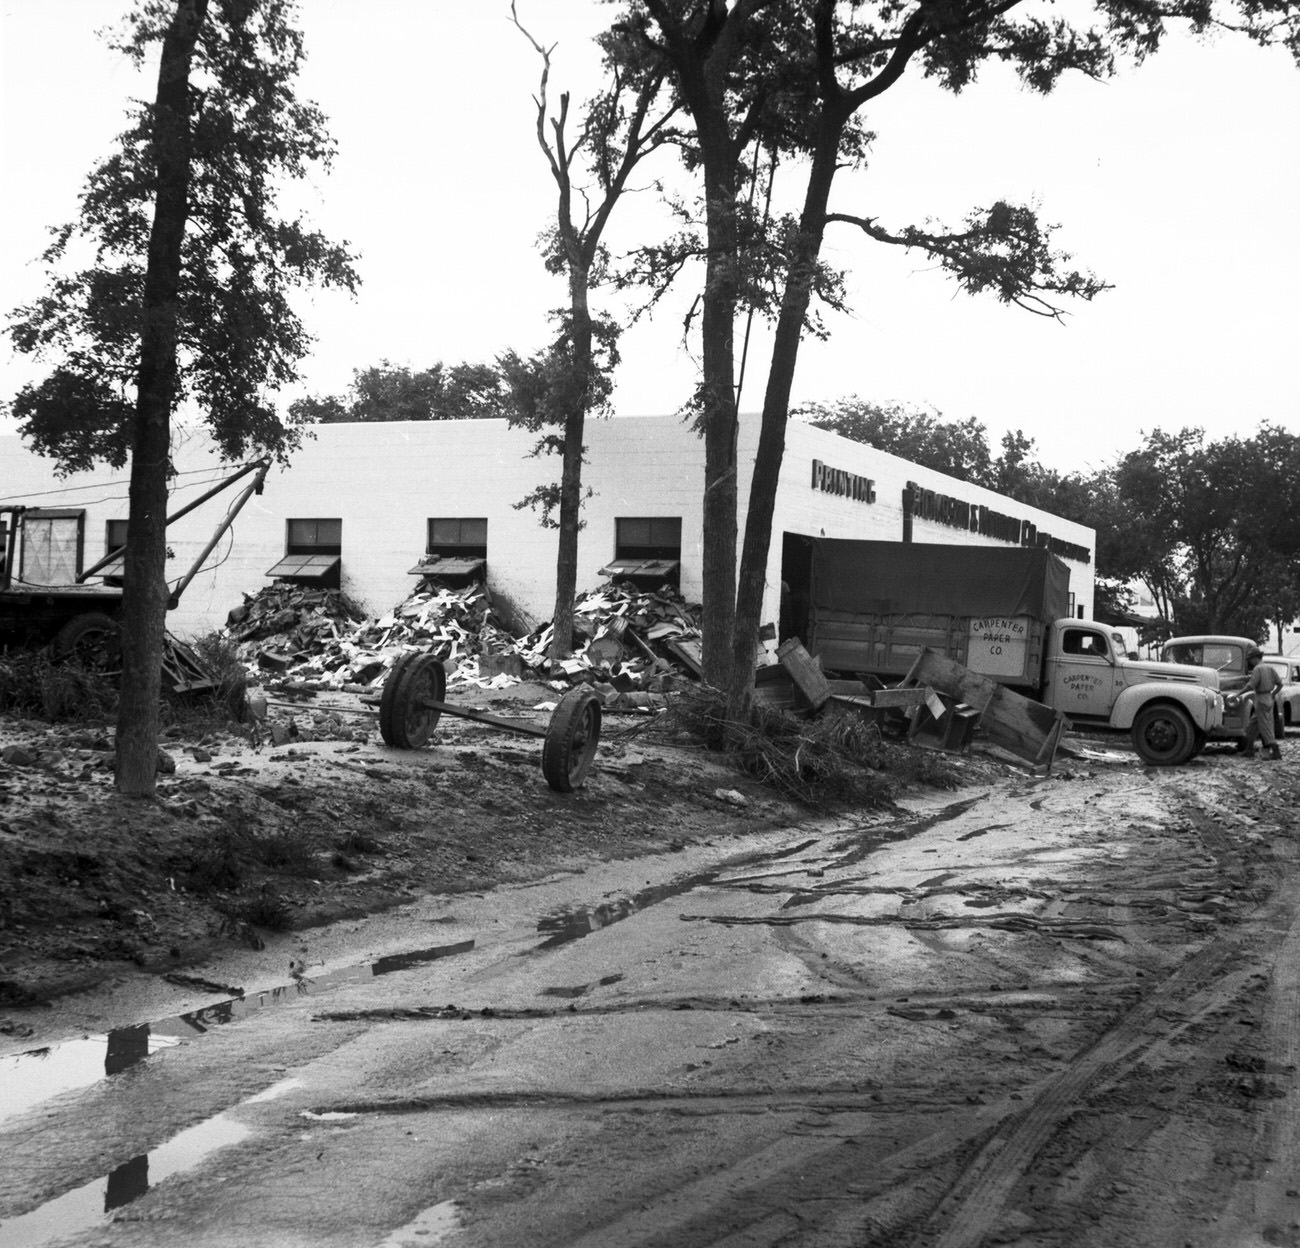 Debris on the side of a building after flood, 1949